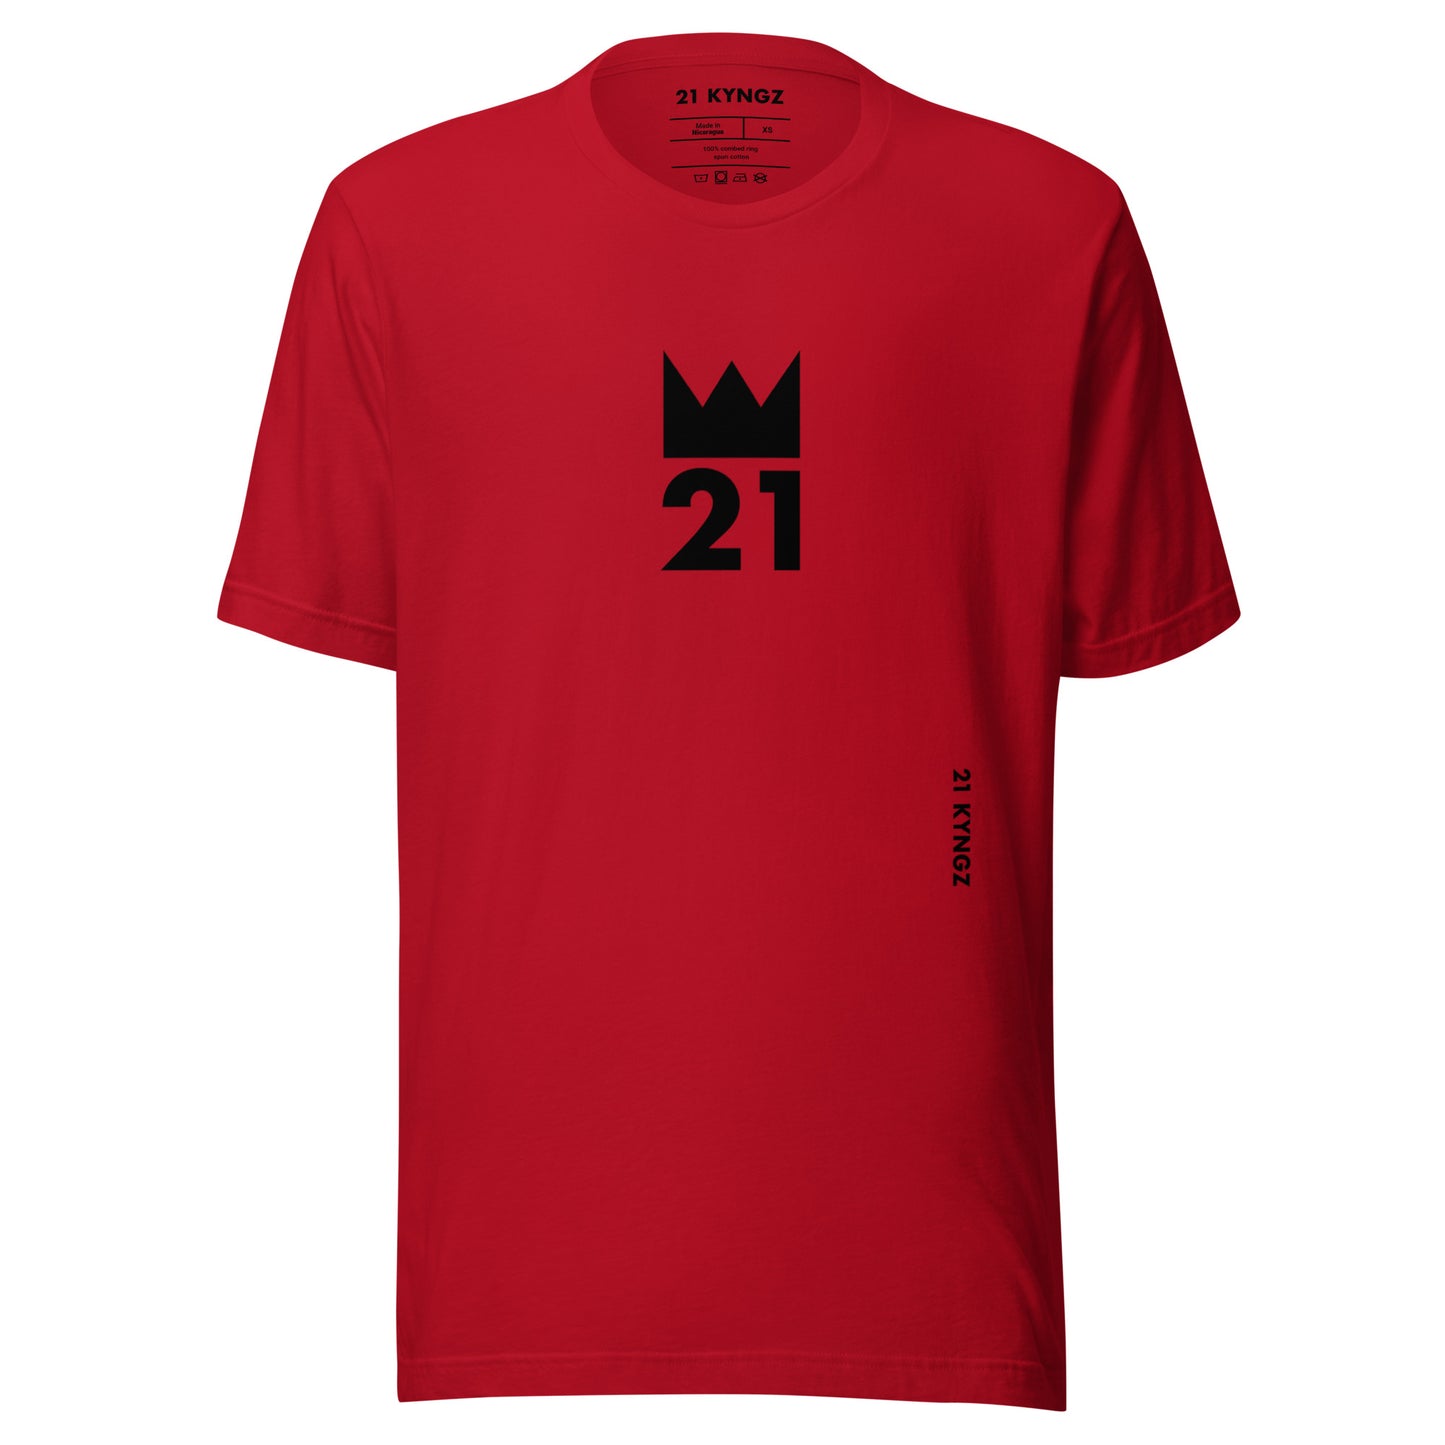 21 KYNGZ (Blk)2 t-shirt